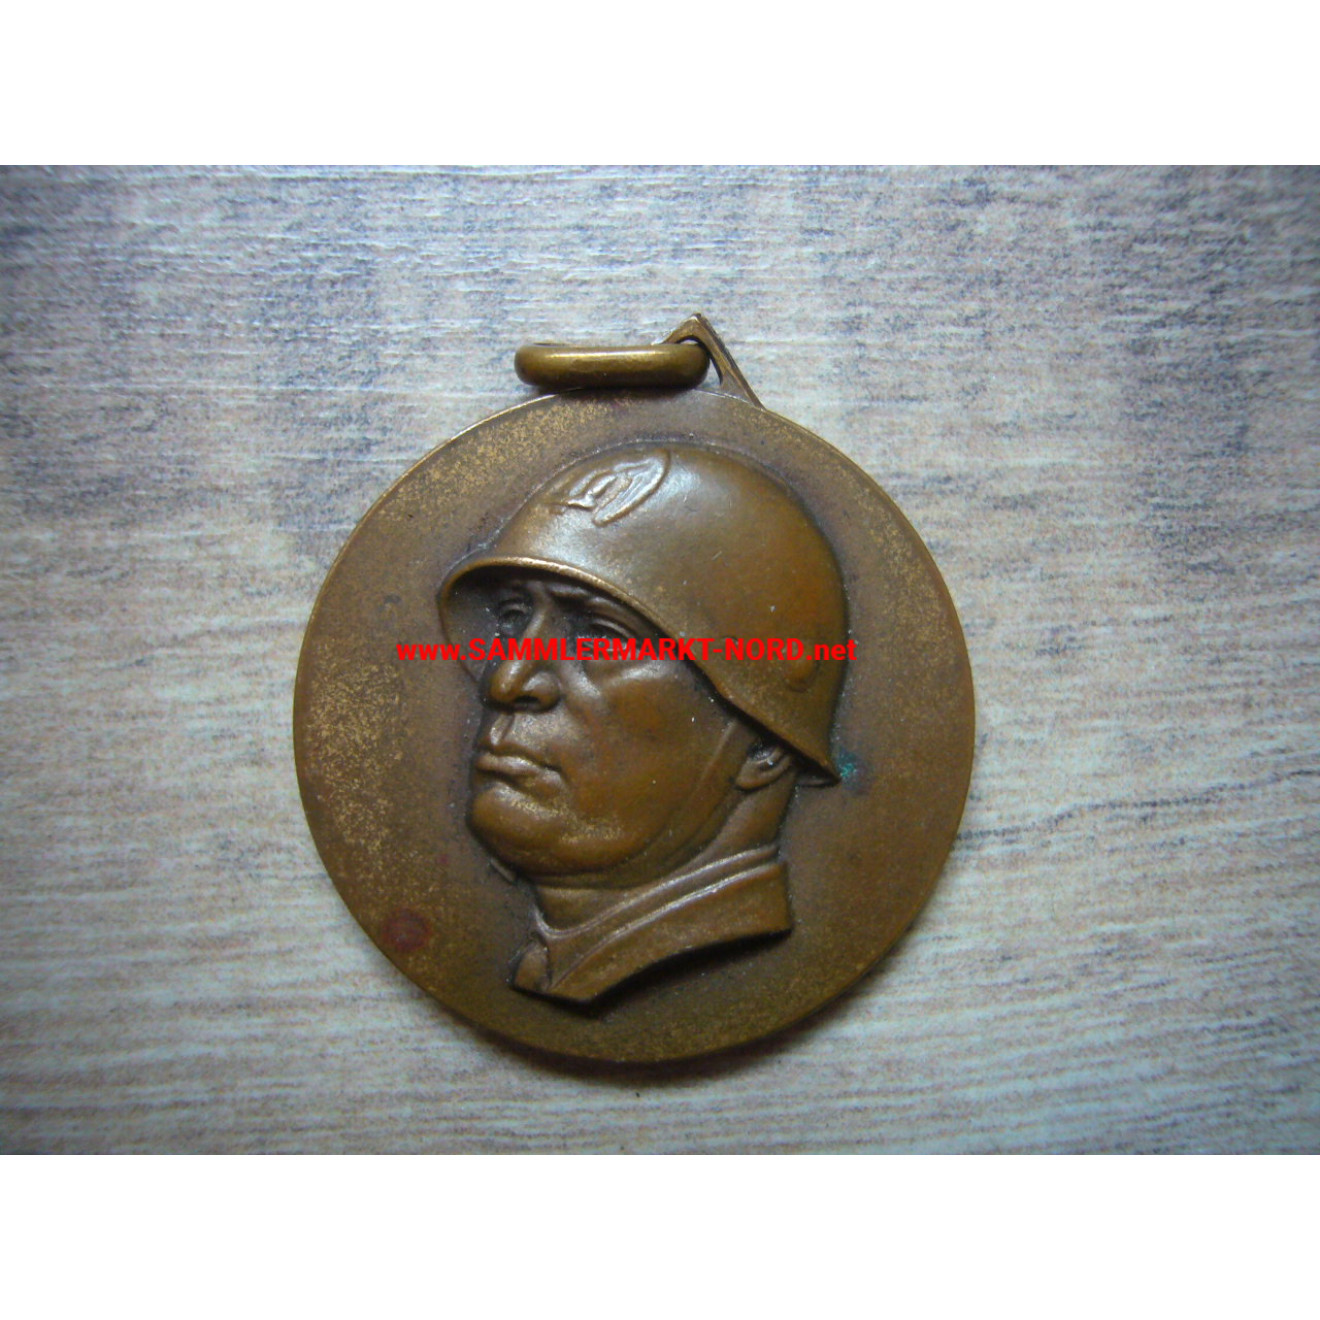 Italien - Benito Mussolini (Duce) - Medaille